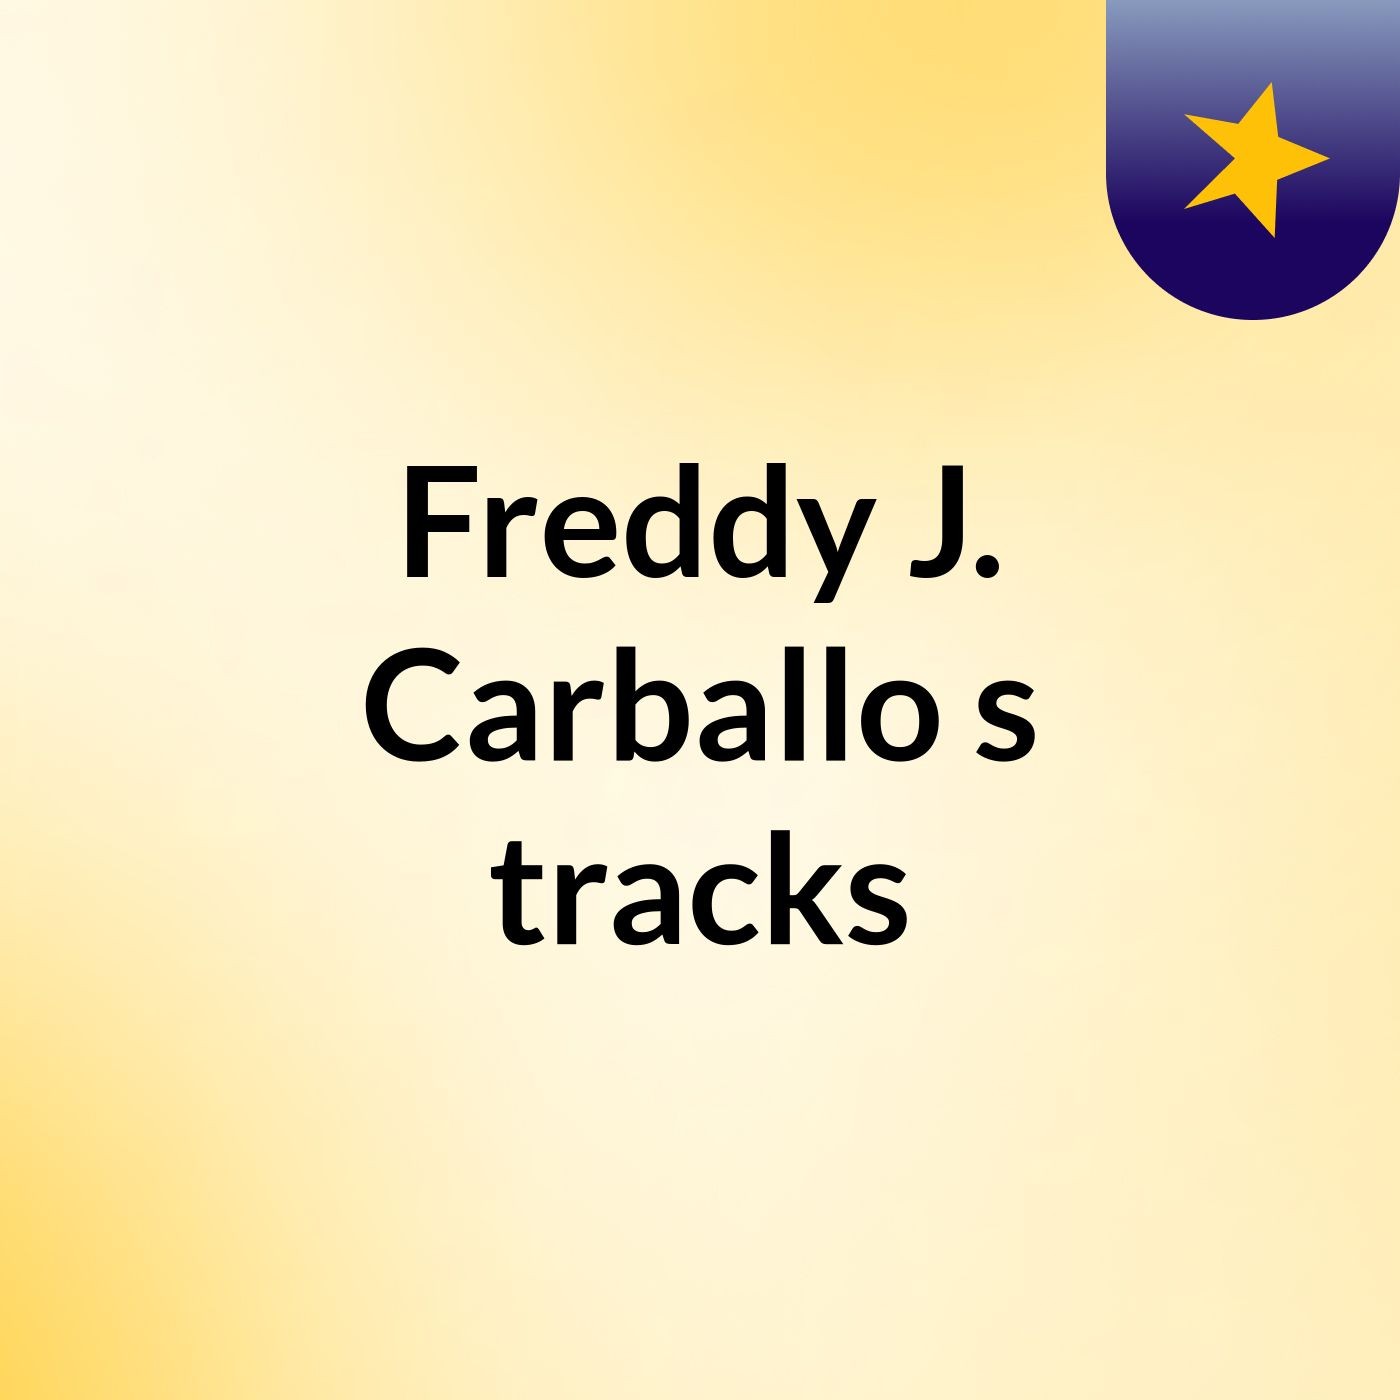 Freddy J. Carballo's tracks